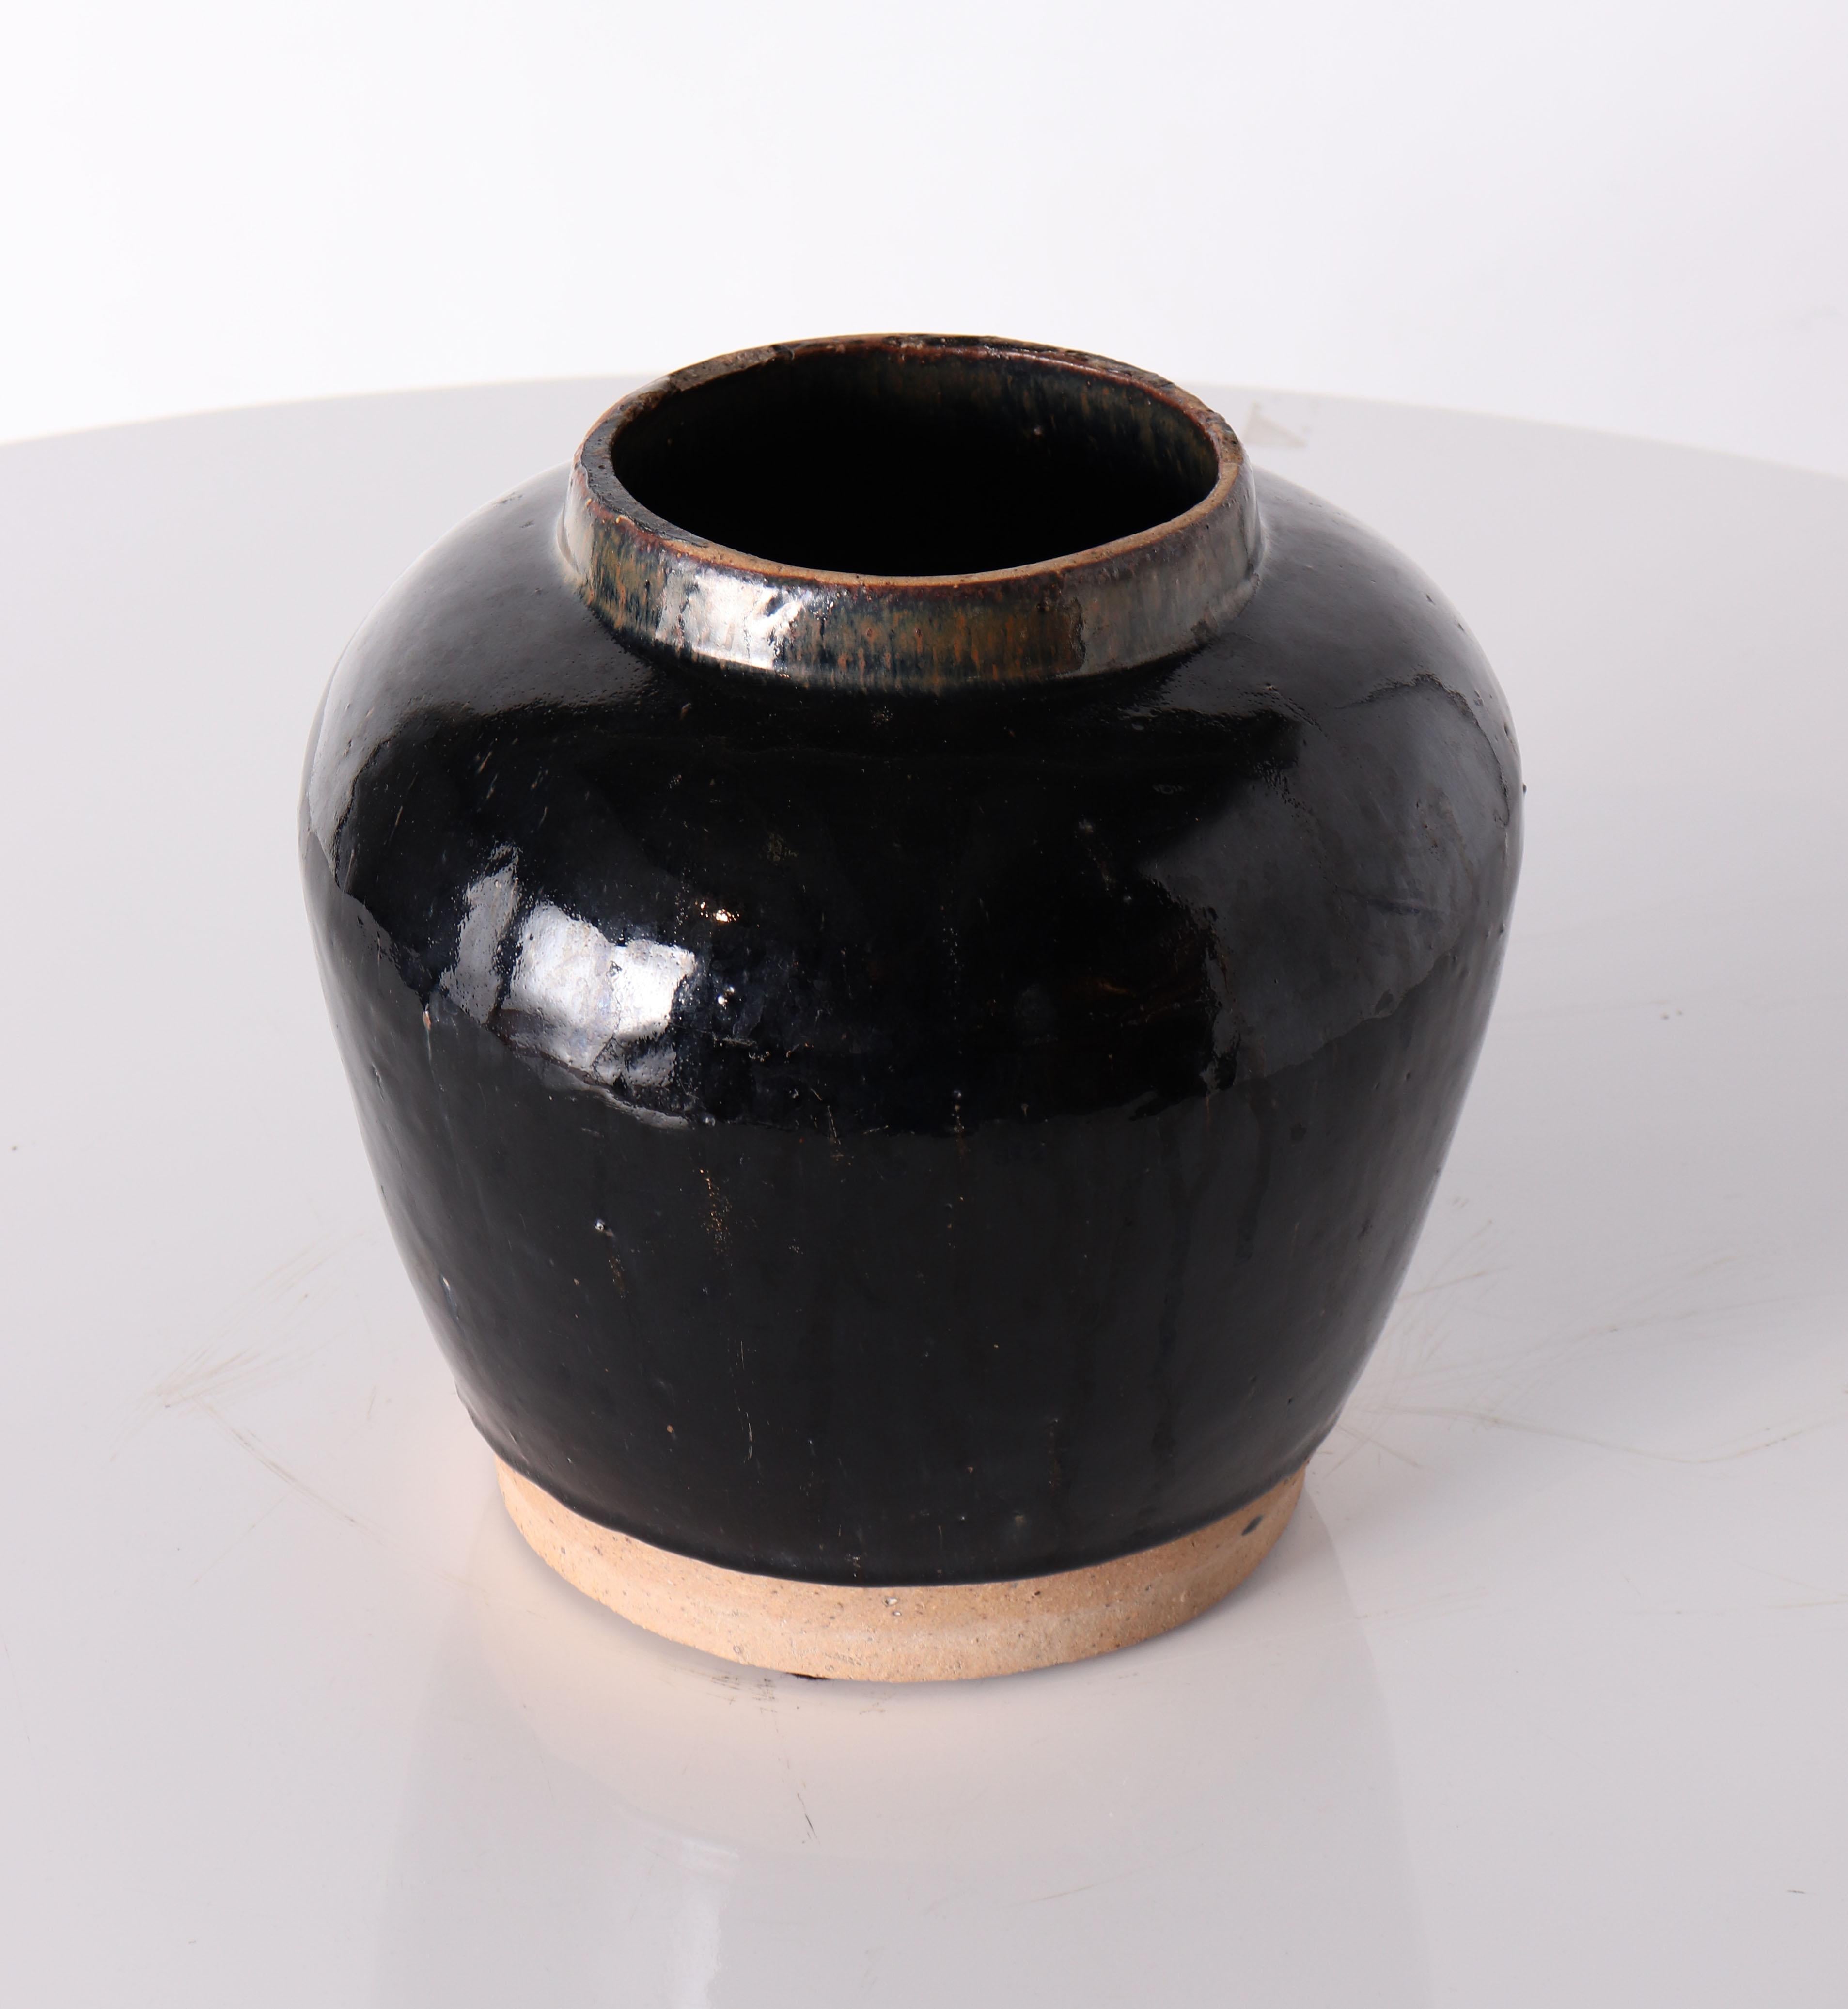 Glazed ceramic jar / pot, black. In my organic, contemporary, vintage and mid-century modern aesthetic.